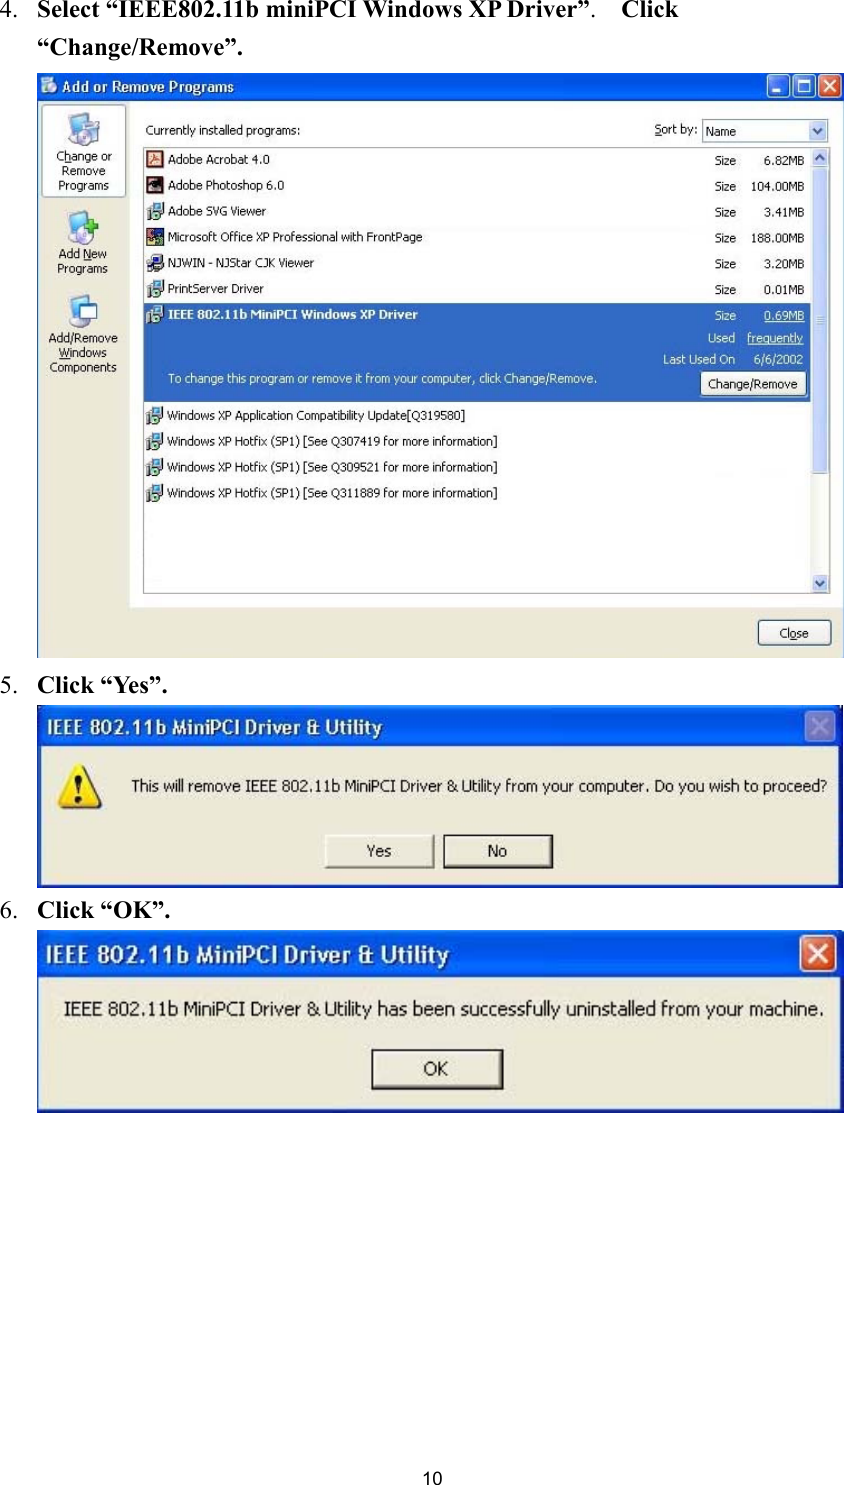  104. Select “IEEE802.11b miniPCI Windows XP Driver”.Click “Change/Remove”.5. Click “Yes”.6. Click “OK”.